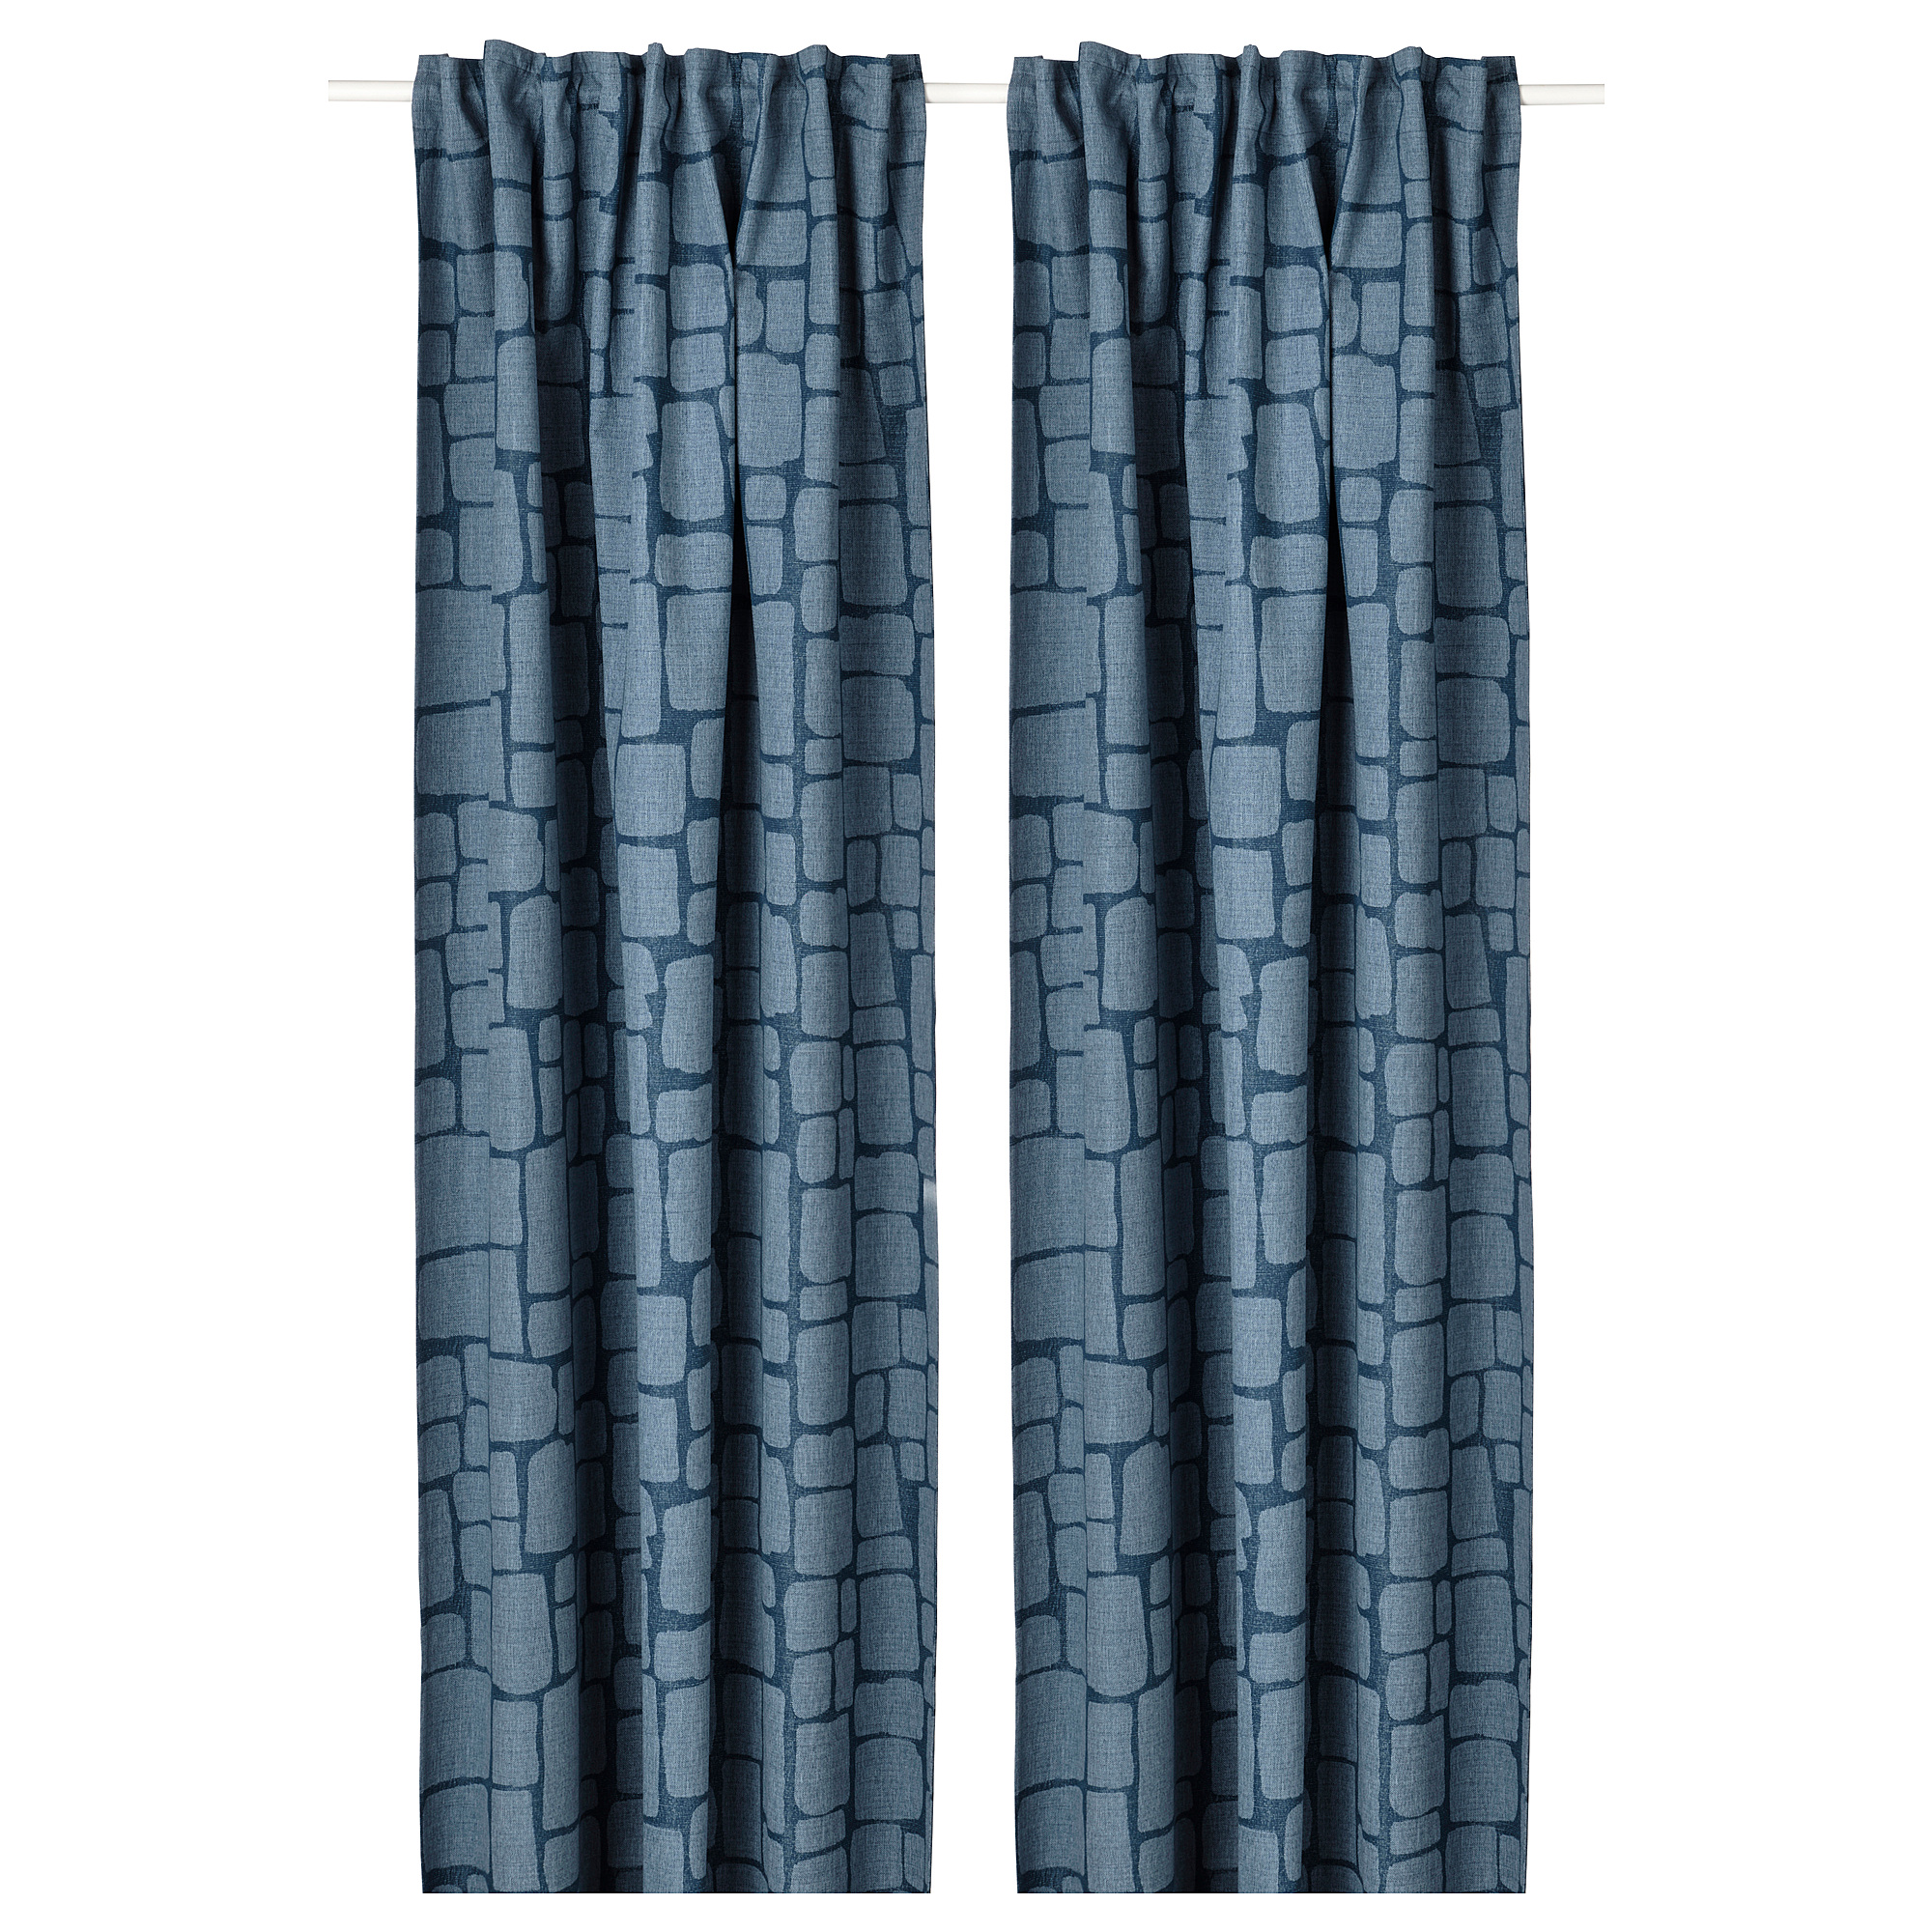 LÖNNSTÄVMAL block-out curtains, 1 pair